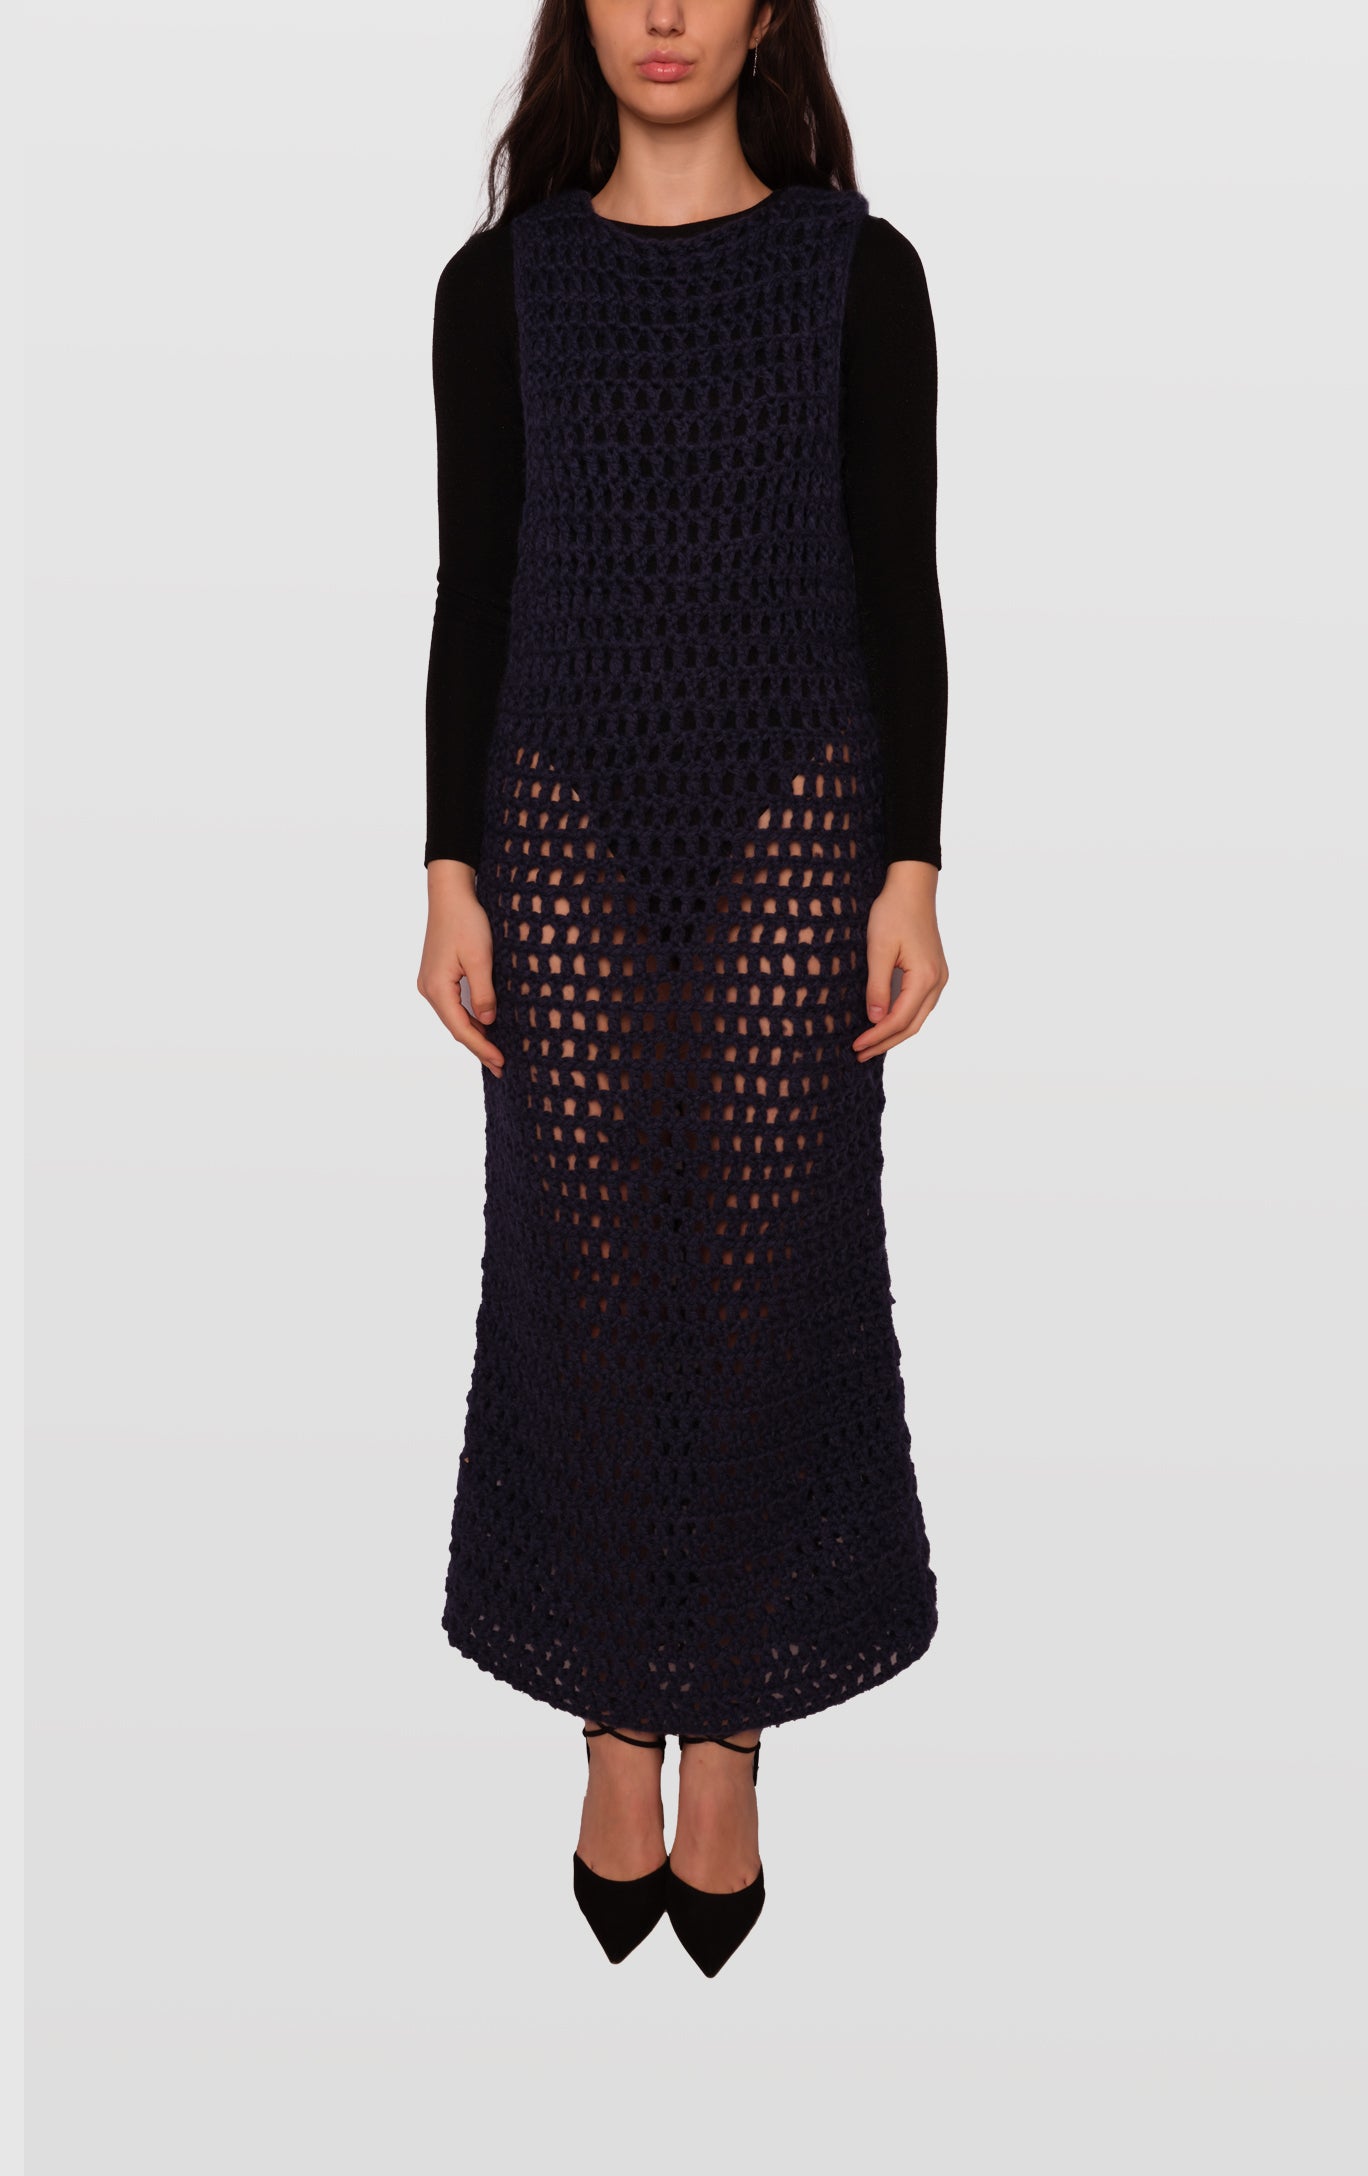 Doresu Hand Knitted Dress